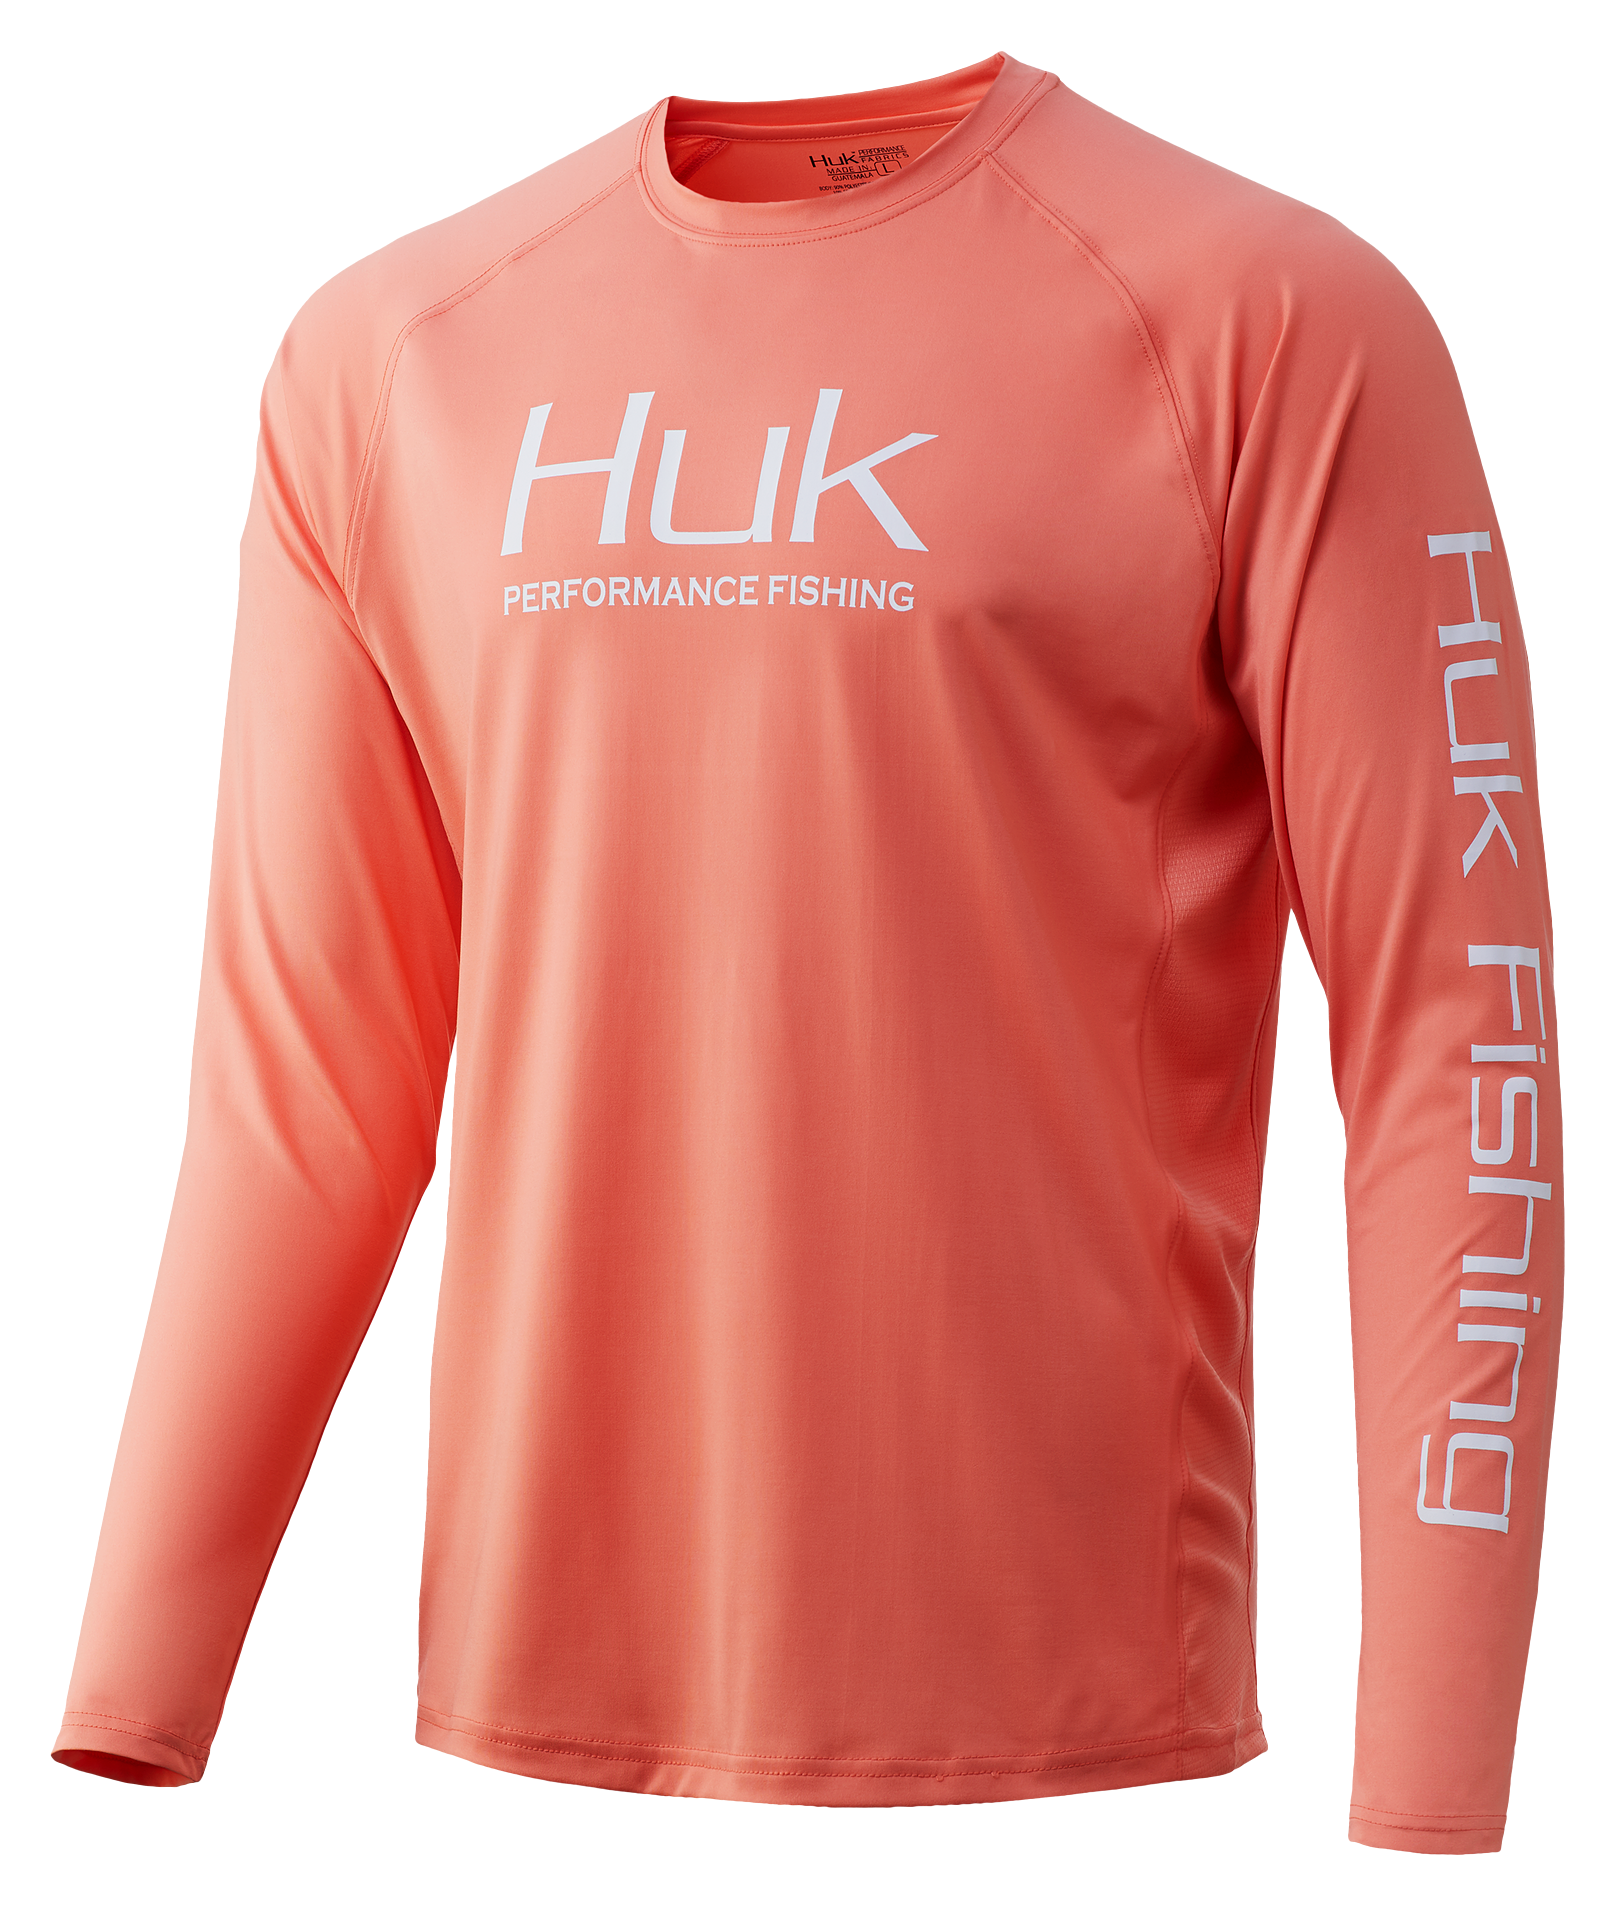 Huk Fishing Shirts Big Tall, Huk Long Sleeve Fishing Shirts